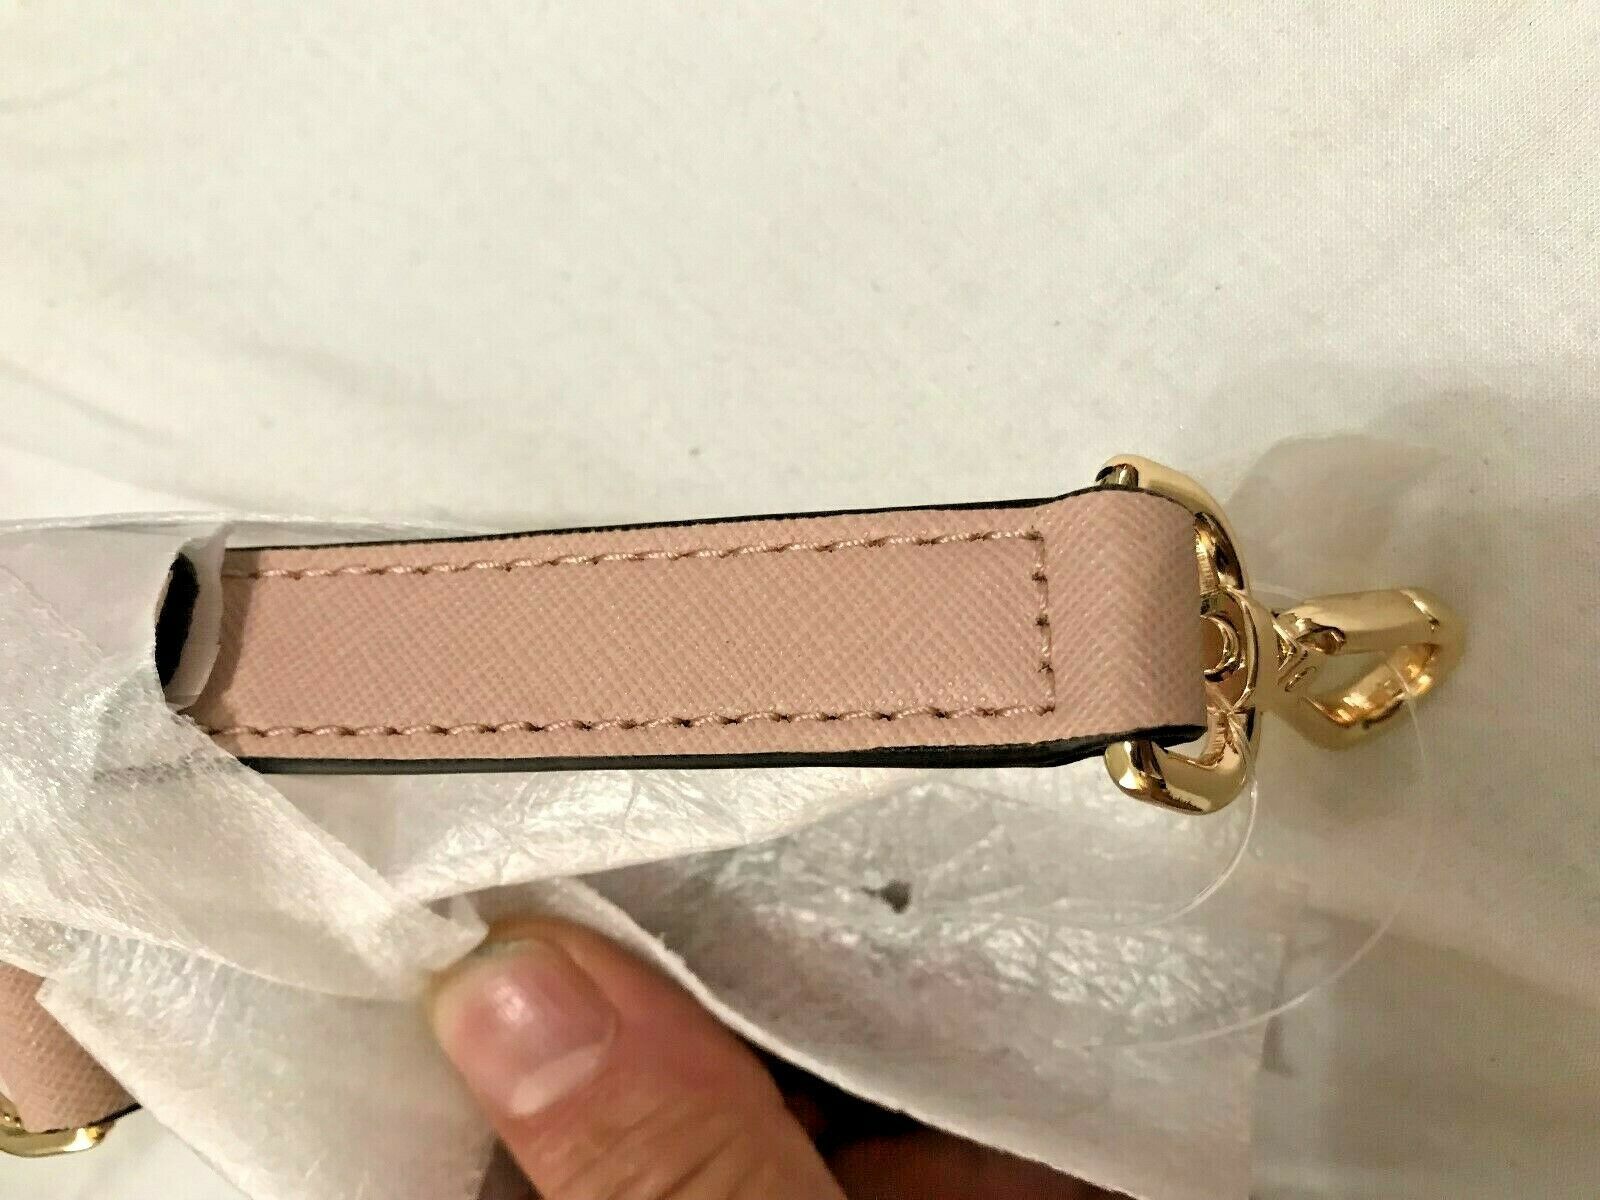 michael kors replacement straps for handbags